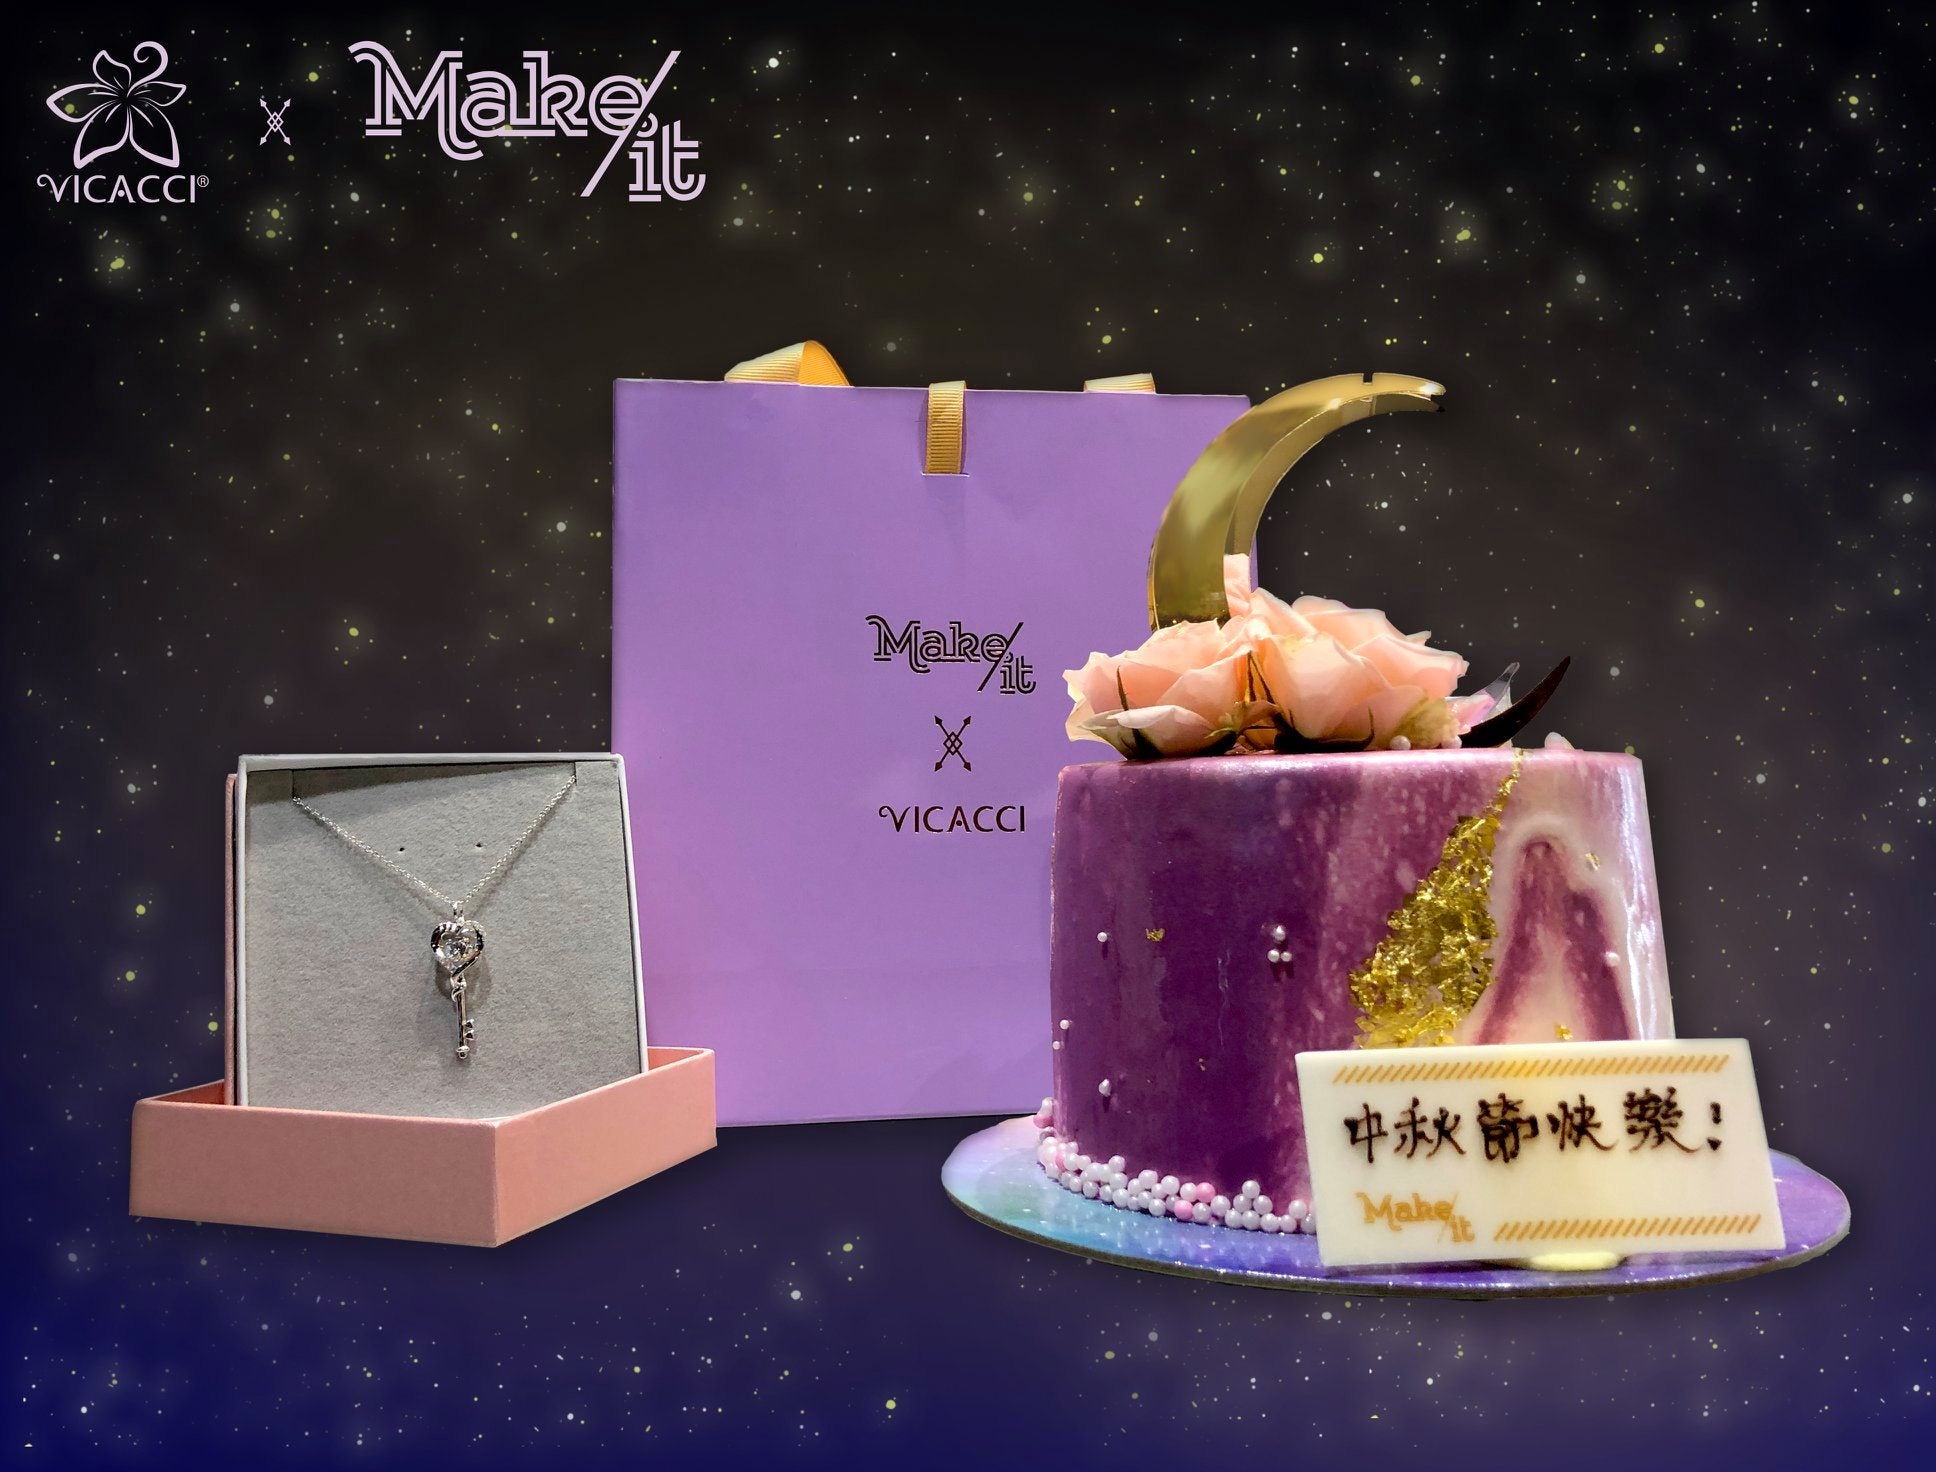 Vicacci x Make it - Women's Favorite Jewelry + Cake Combination